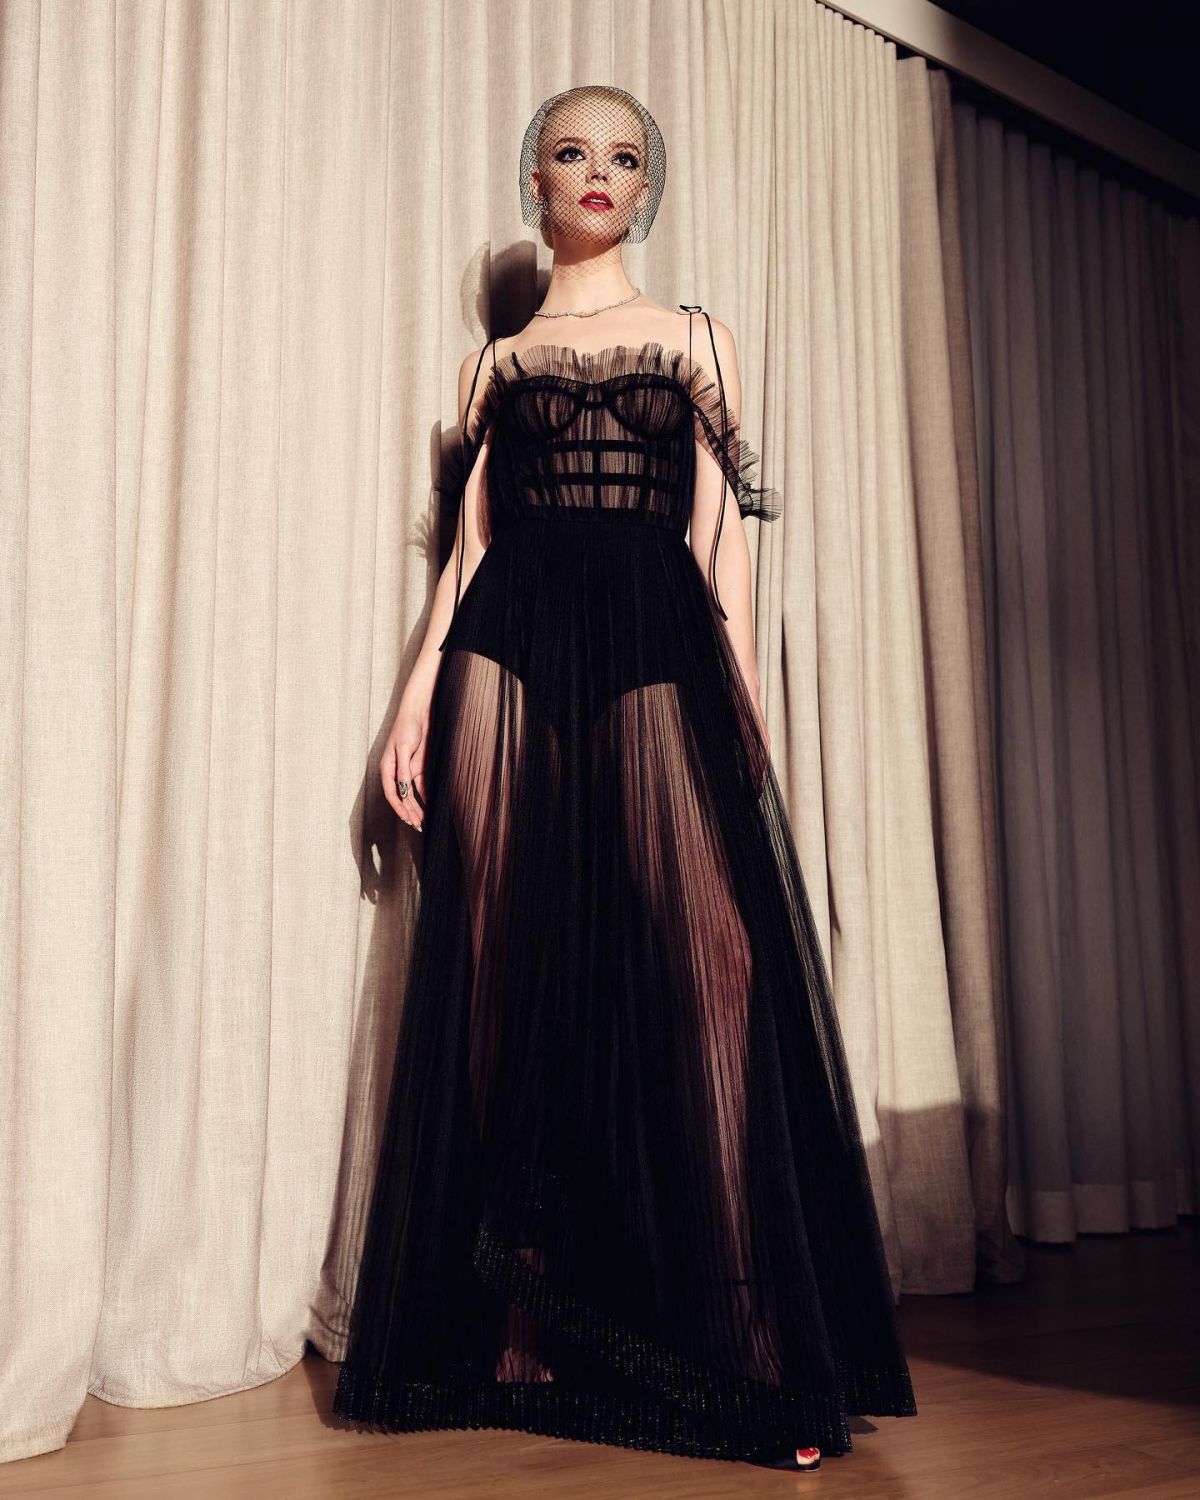 ANYA TAYLOR-JOY for Vogue Dior, March 2022 – HawtCelebs